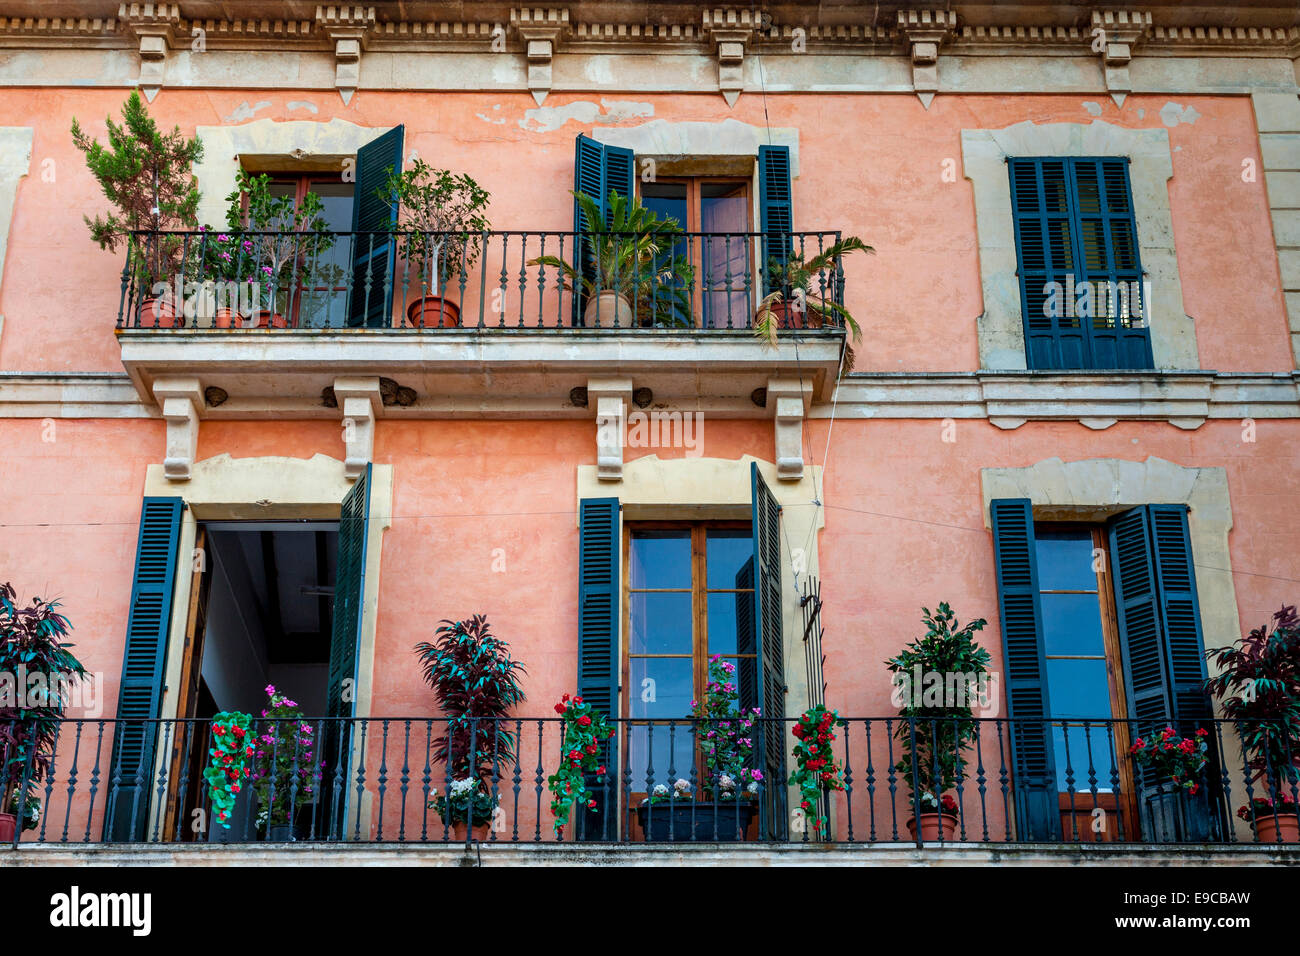 Farbenfrohe Gebäude außen, Altstadt von Alcudia, Mallorca - Spanien Stockfoto